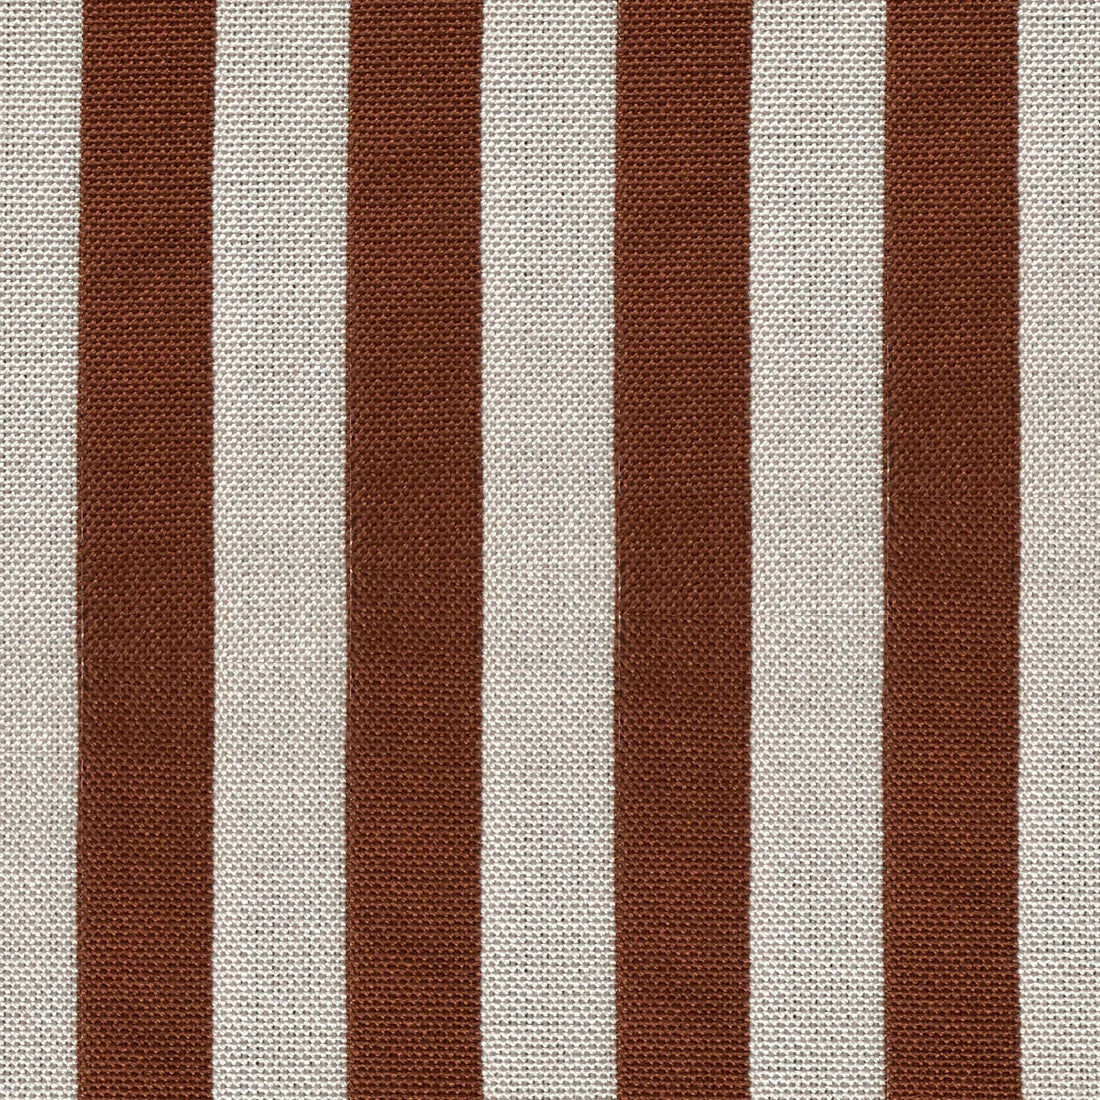 Benjamin fabric in tabaco color - pattern LCT1057.001.0 - by Gaston y Daniela in the Lorenzo Castillo VI collection